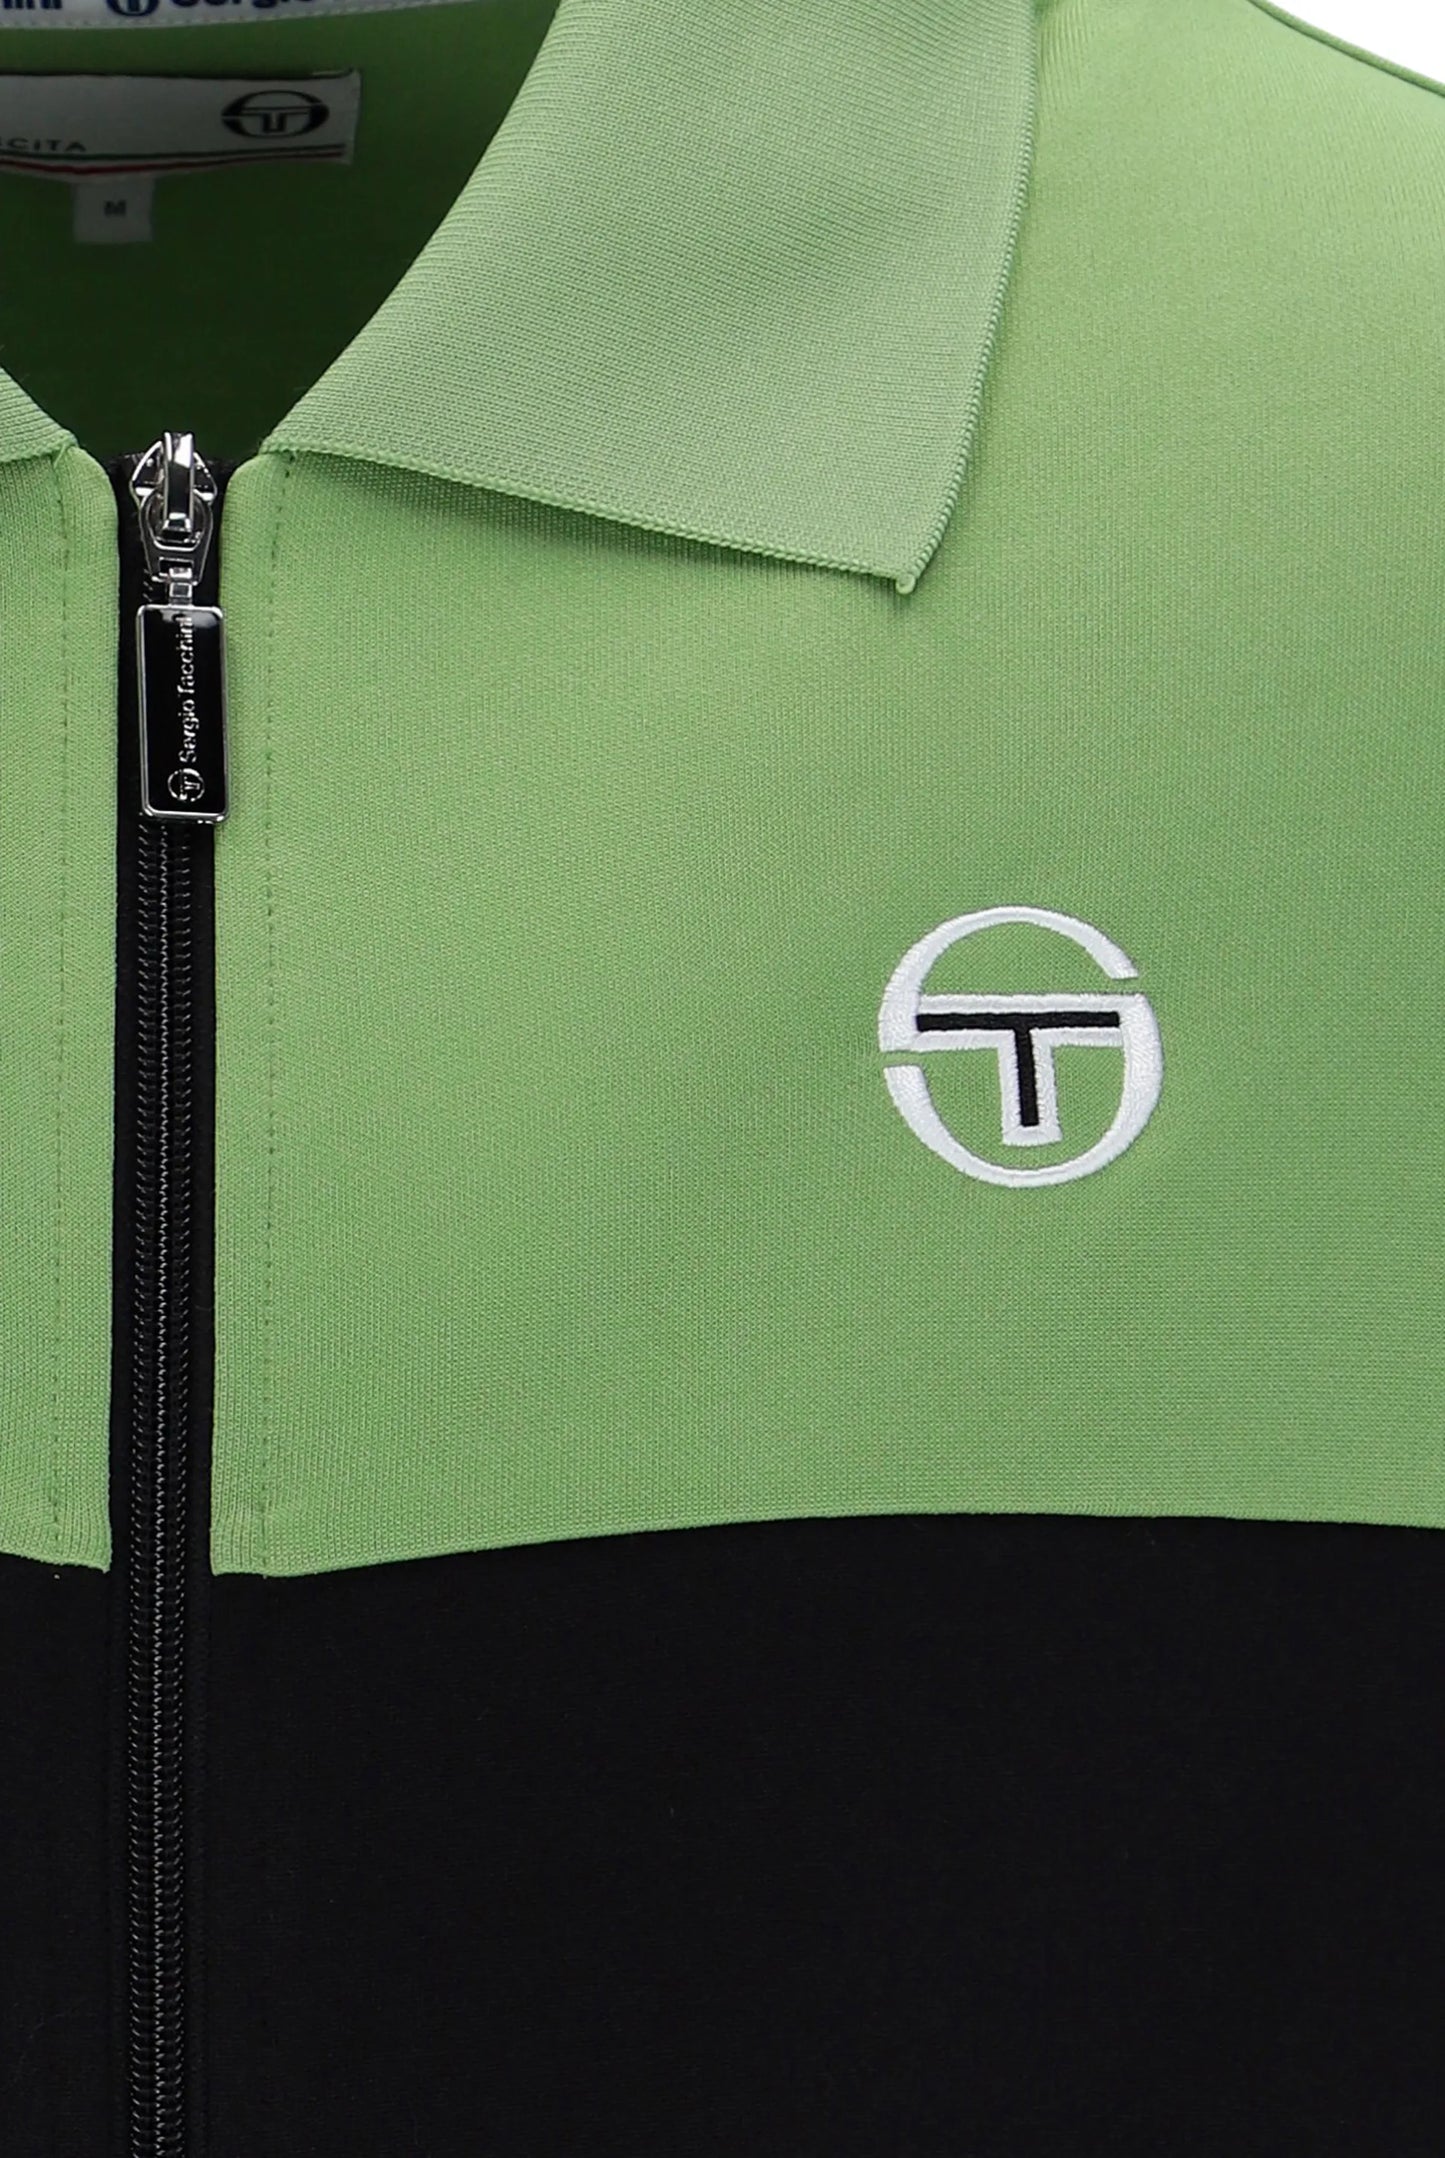 Sergio Tacchini - Tomme Track-Jacket | Black/Jade Green STM16204-577